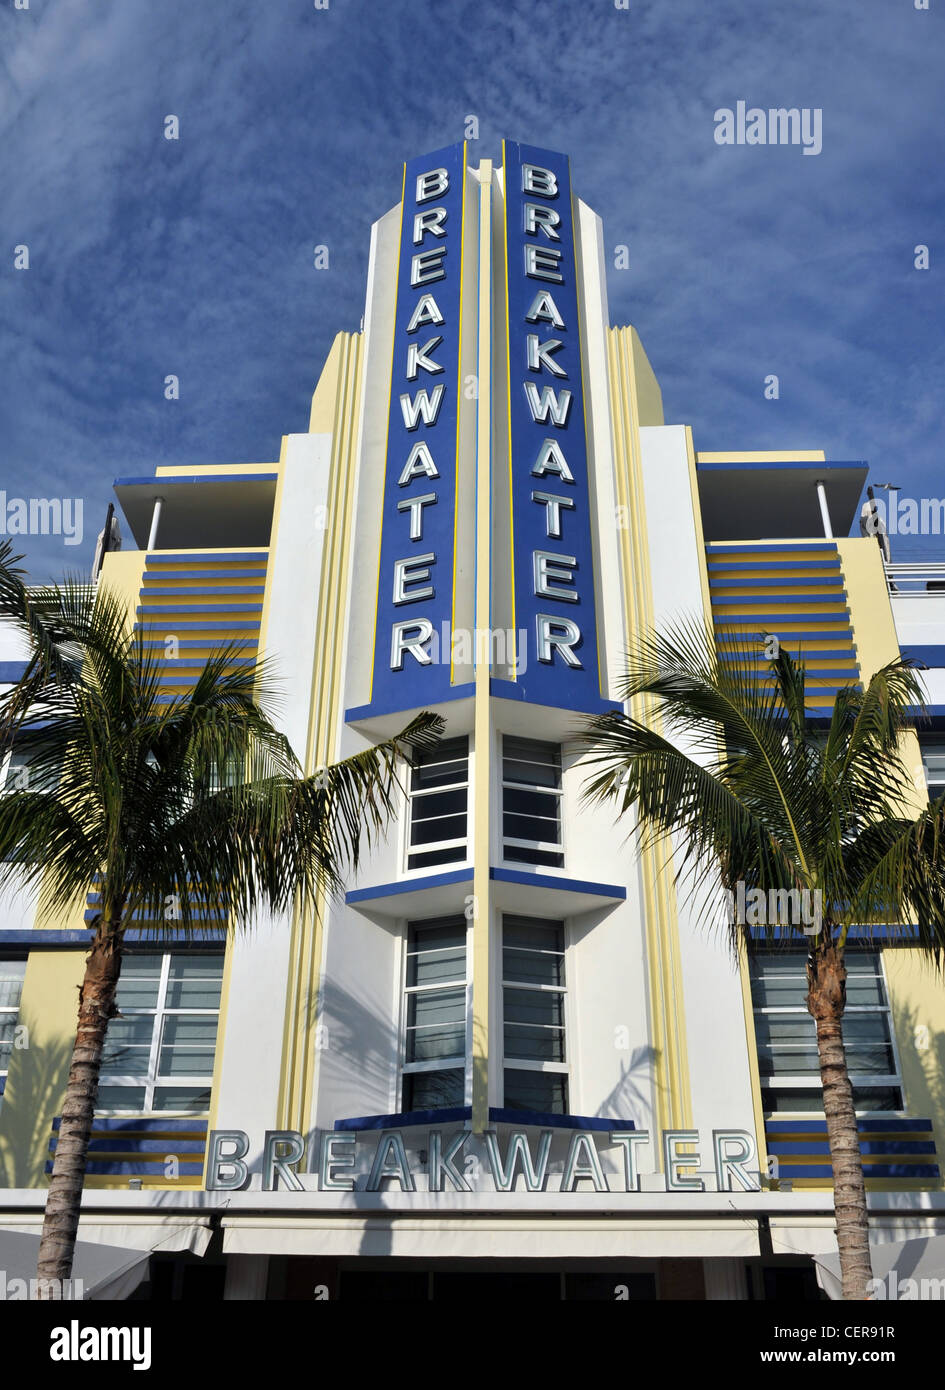 Breakwater Hotel, Miami, Florida, USA Stock Photo